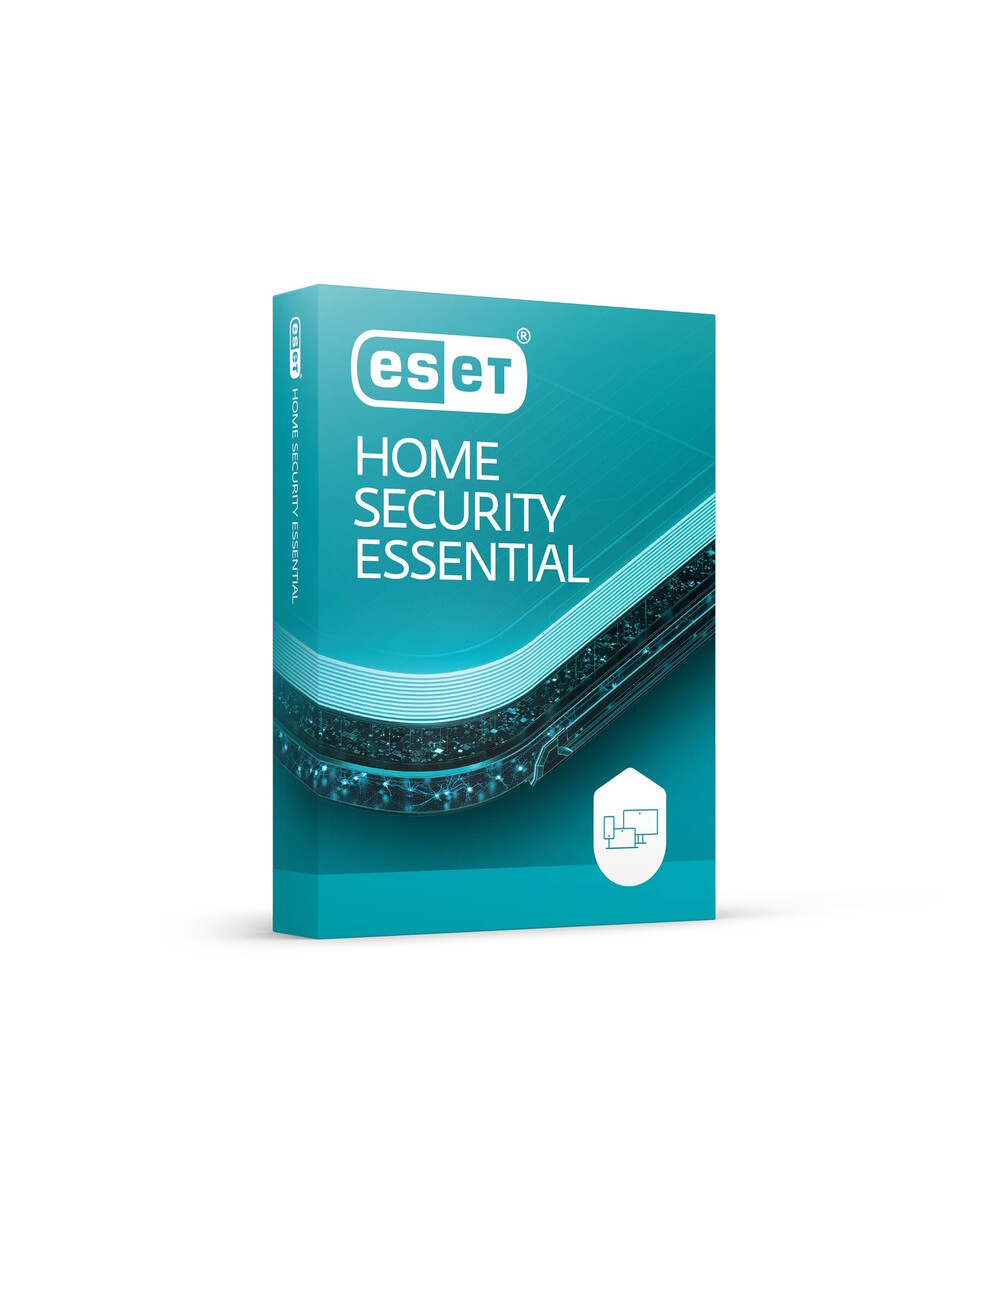 ESET HOME SECURITY ESSENTIAL RINNOVO EX INTERNET SECURITY ESET